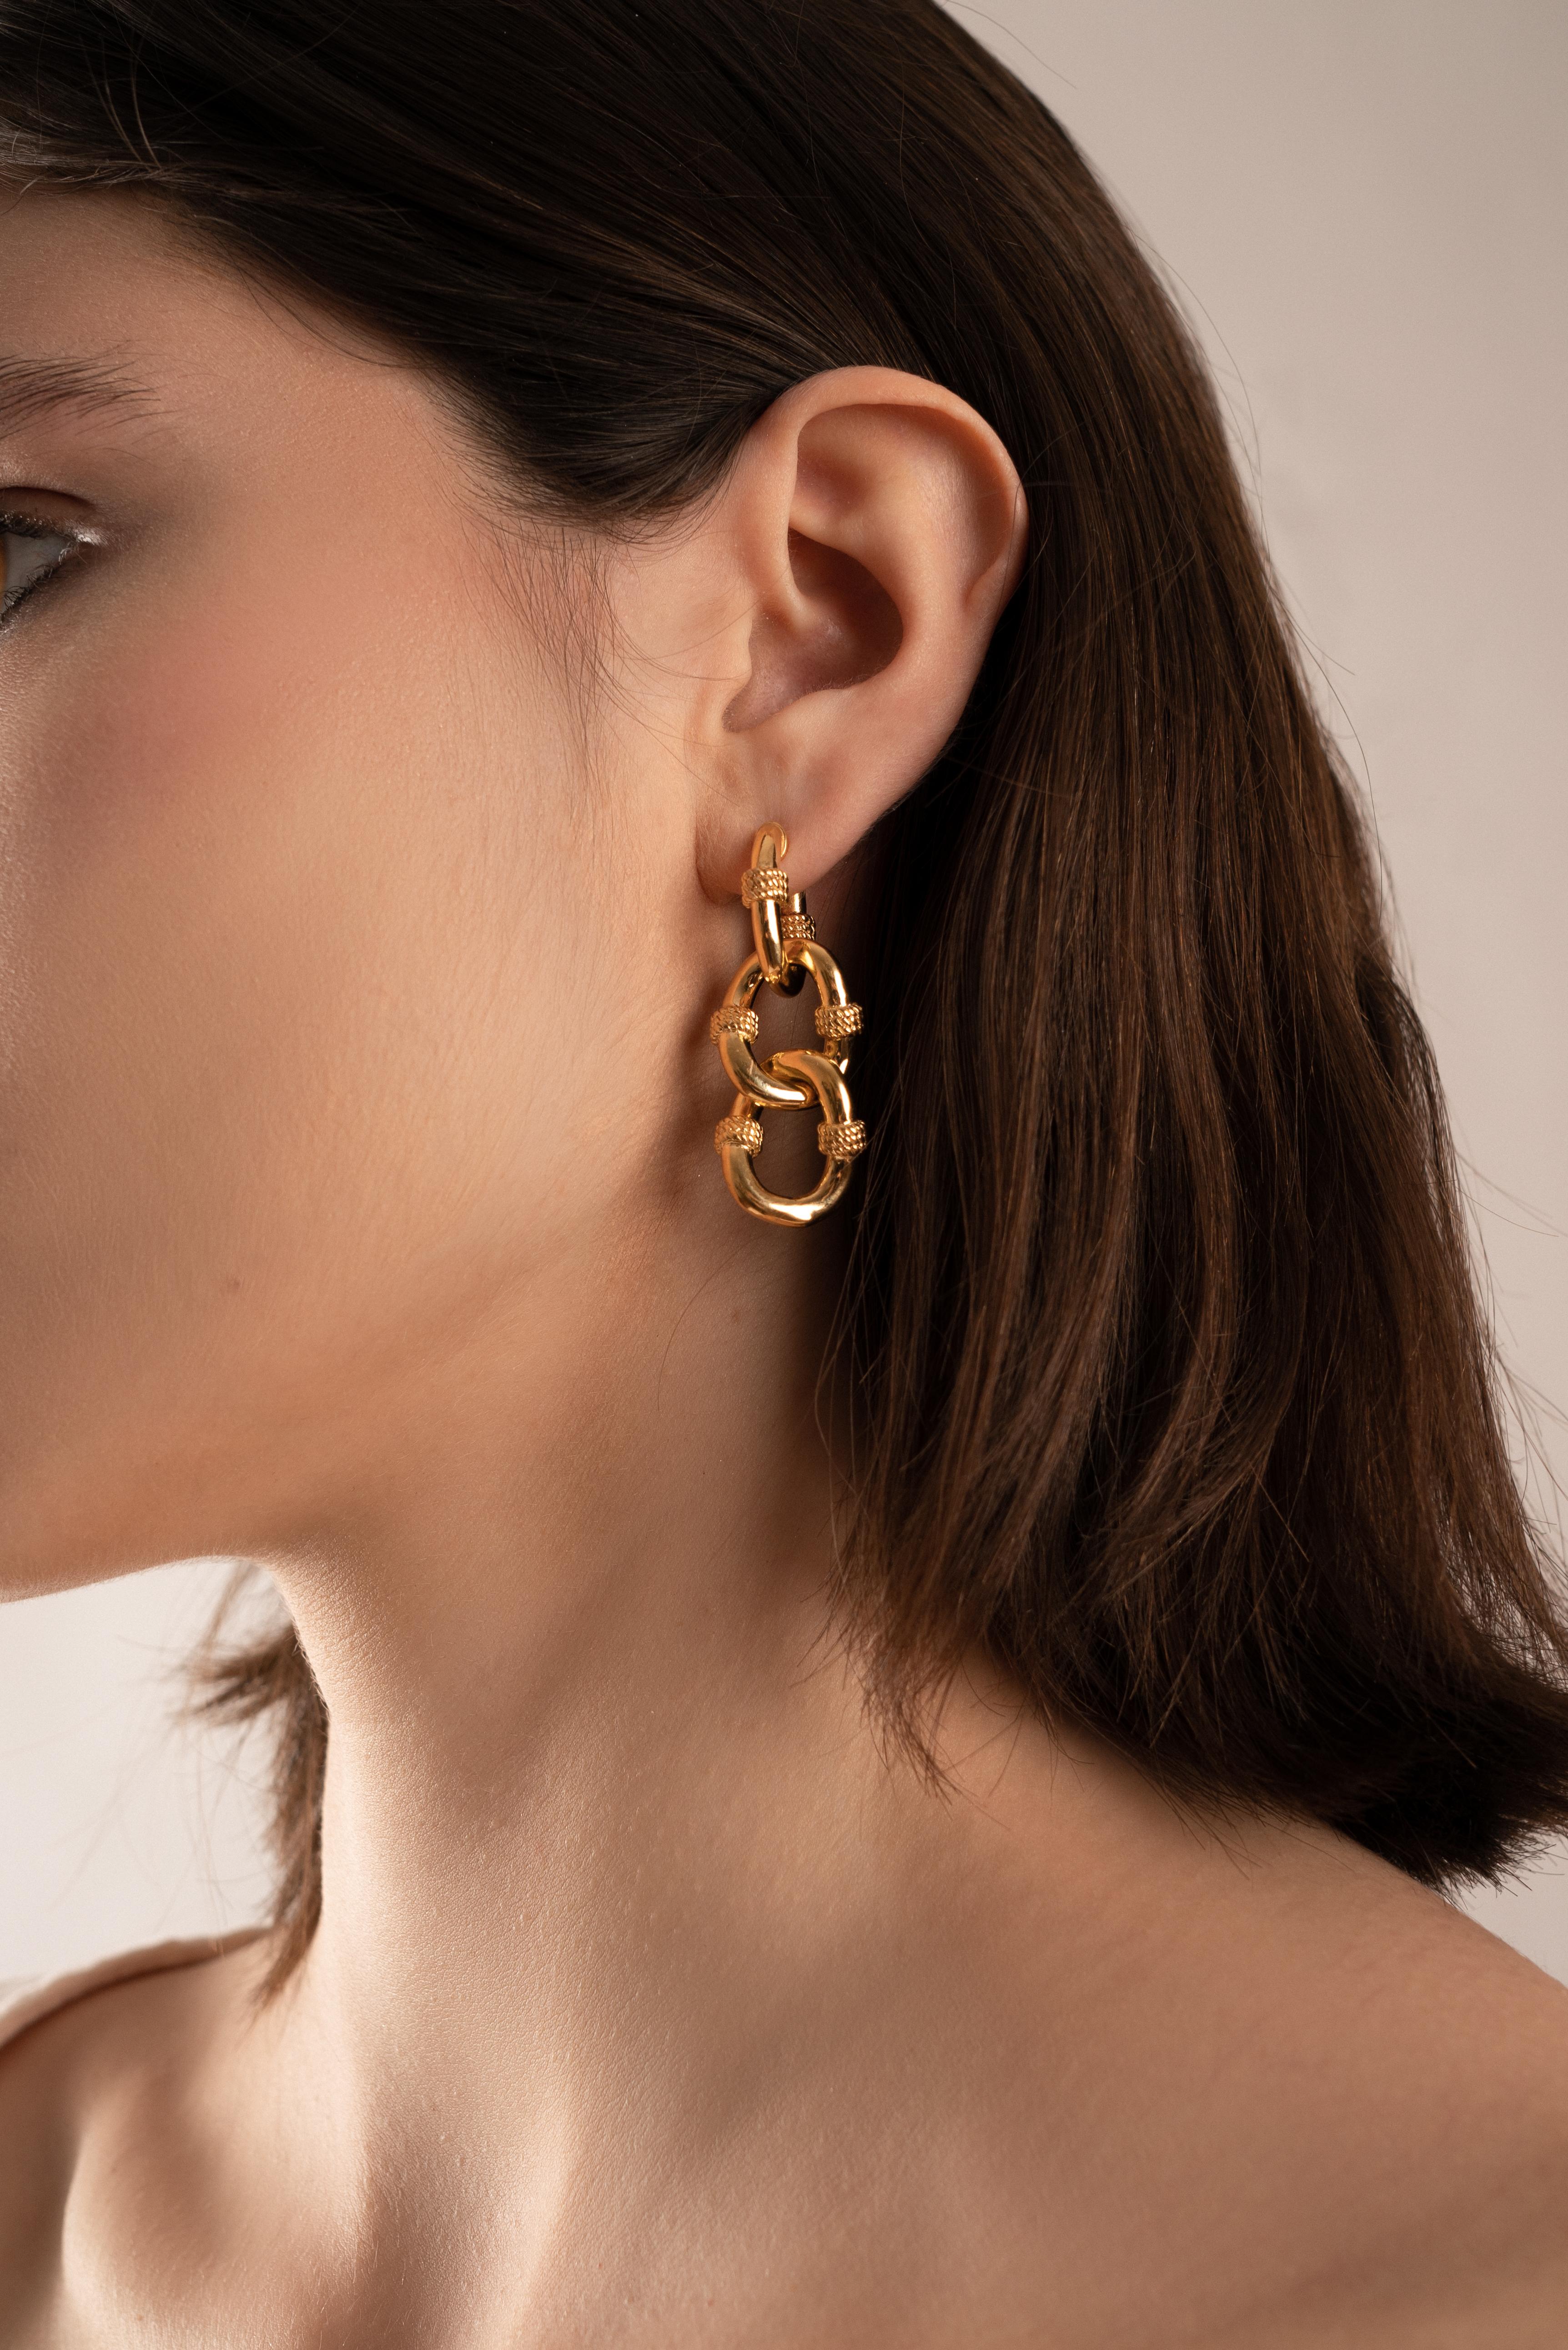 Samantha Siu NY 18k vermeil over silver earrings For Sale 1